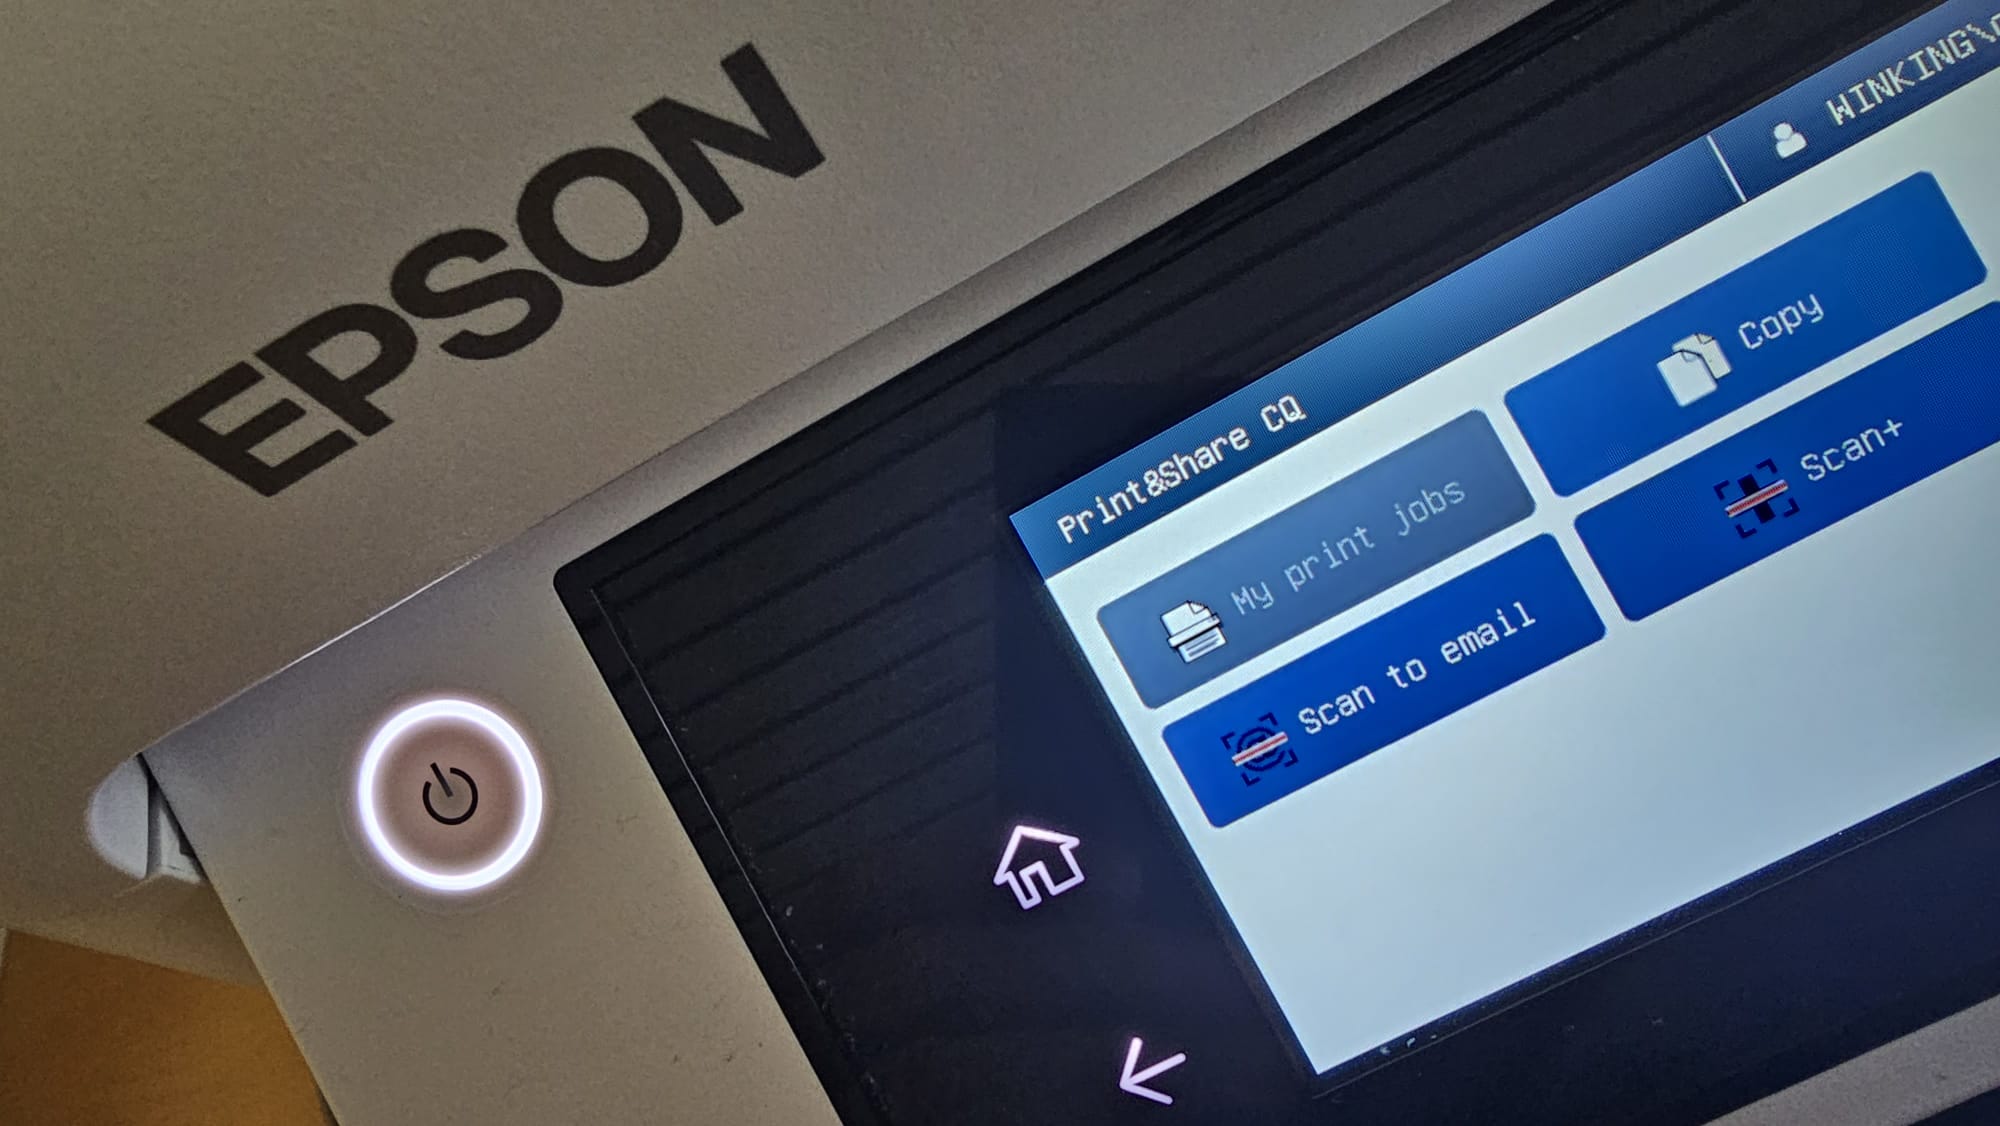 Epson display showing Print&Share CQ